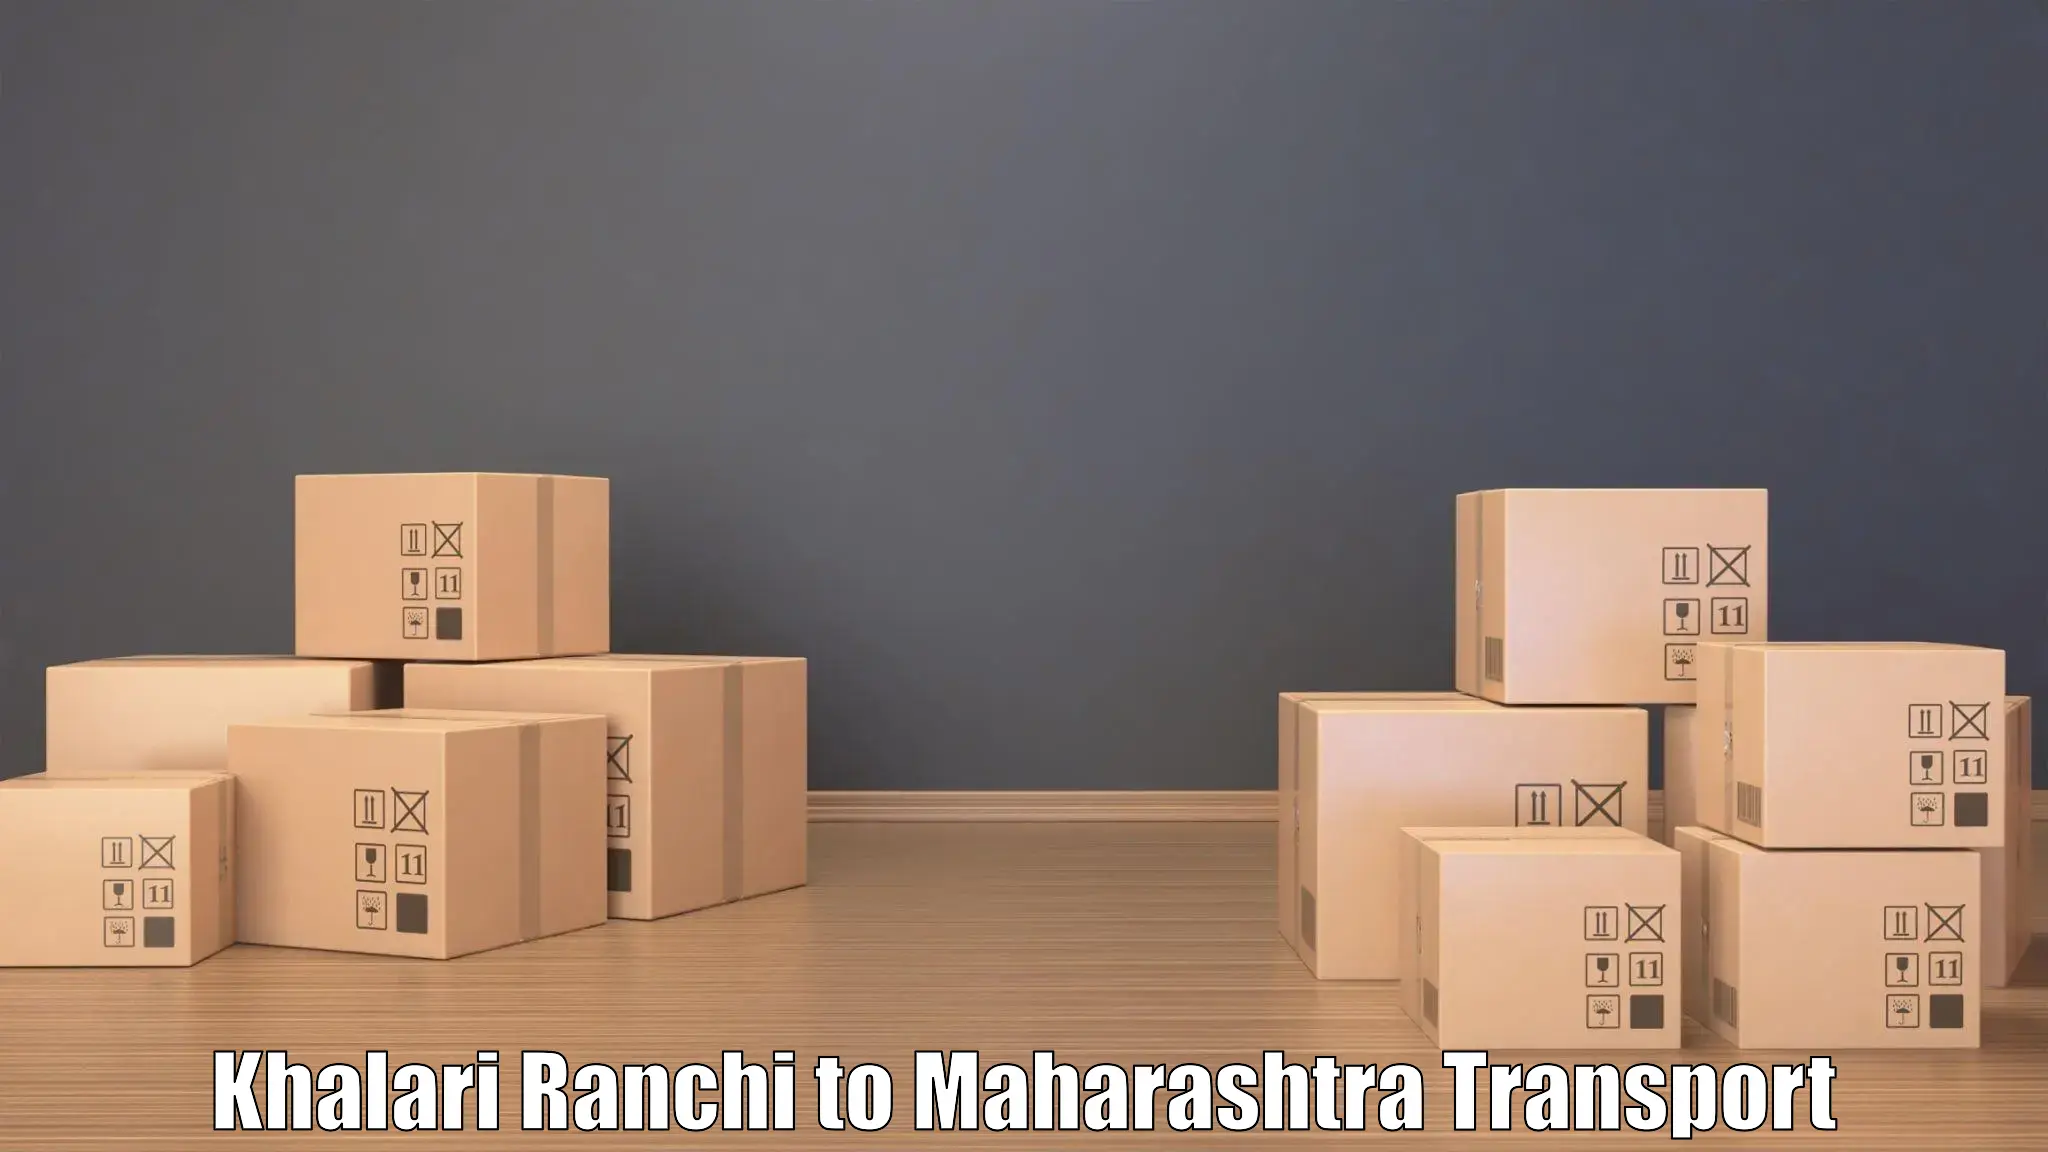 Lorry transport service Khalari Ranchi to Maharashtra